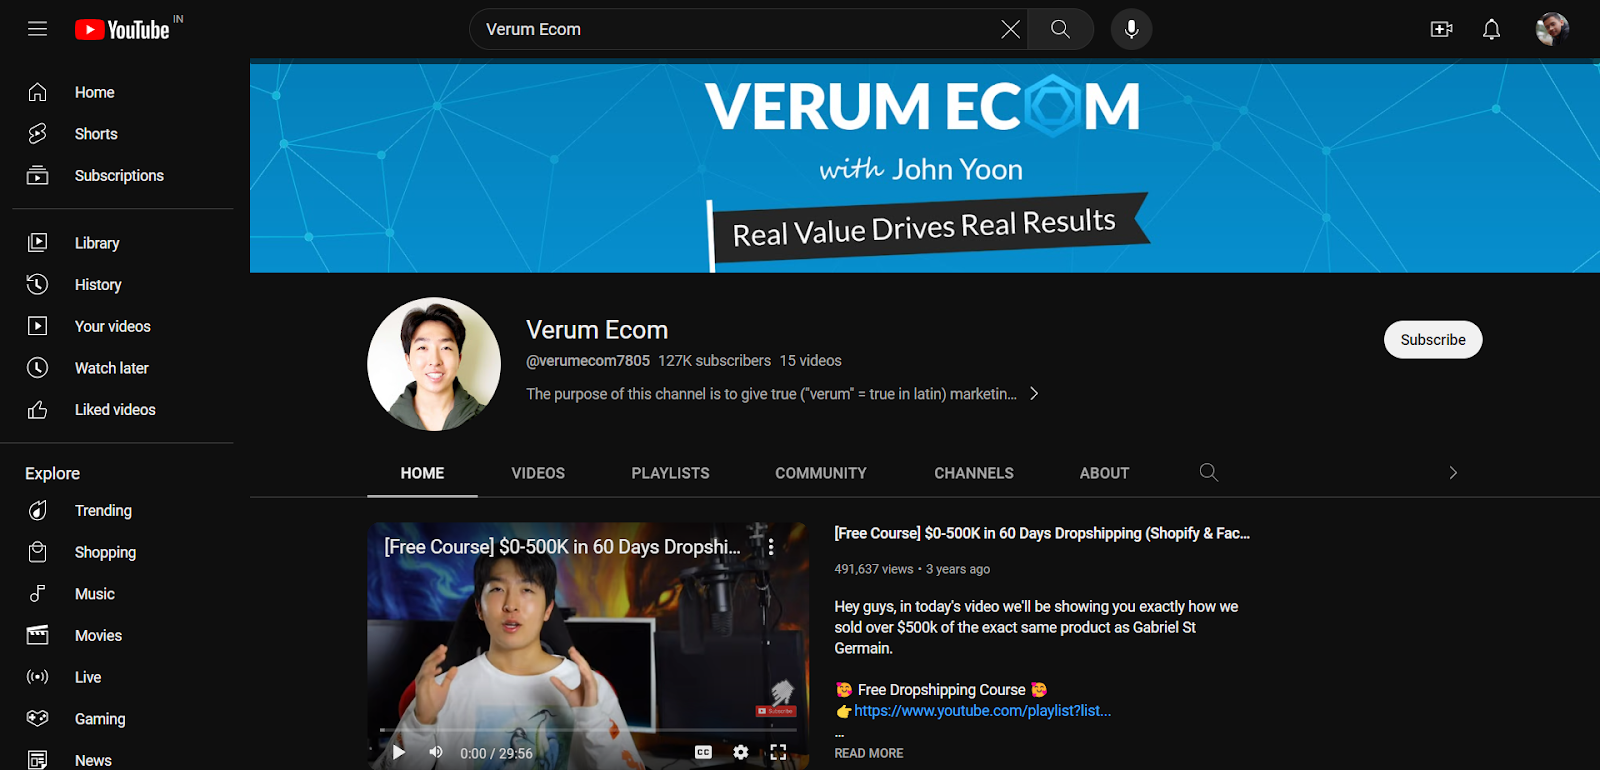 Verum Ecom's YouTube Channel